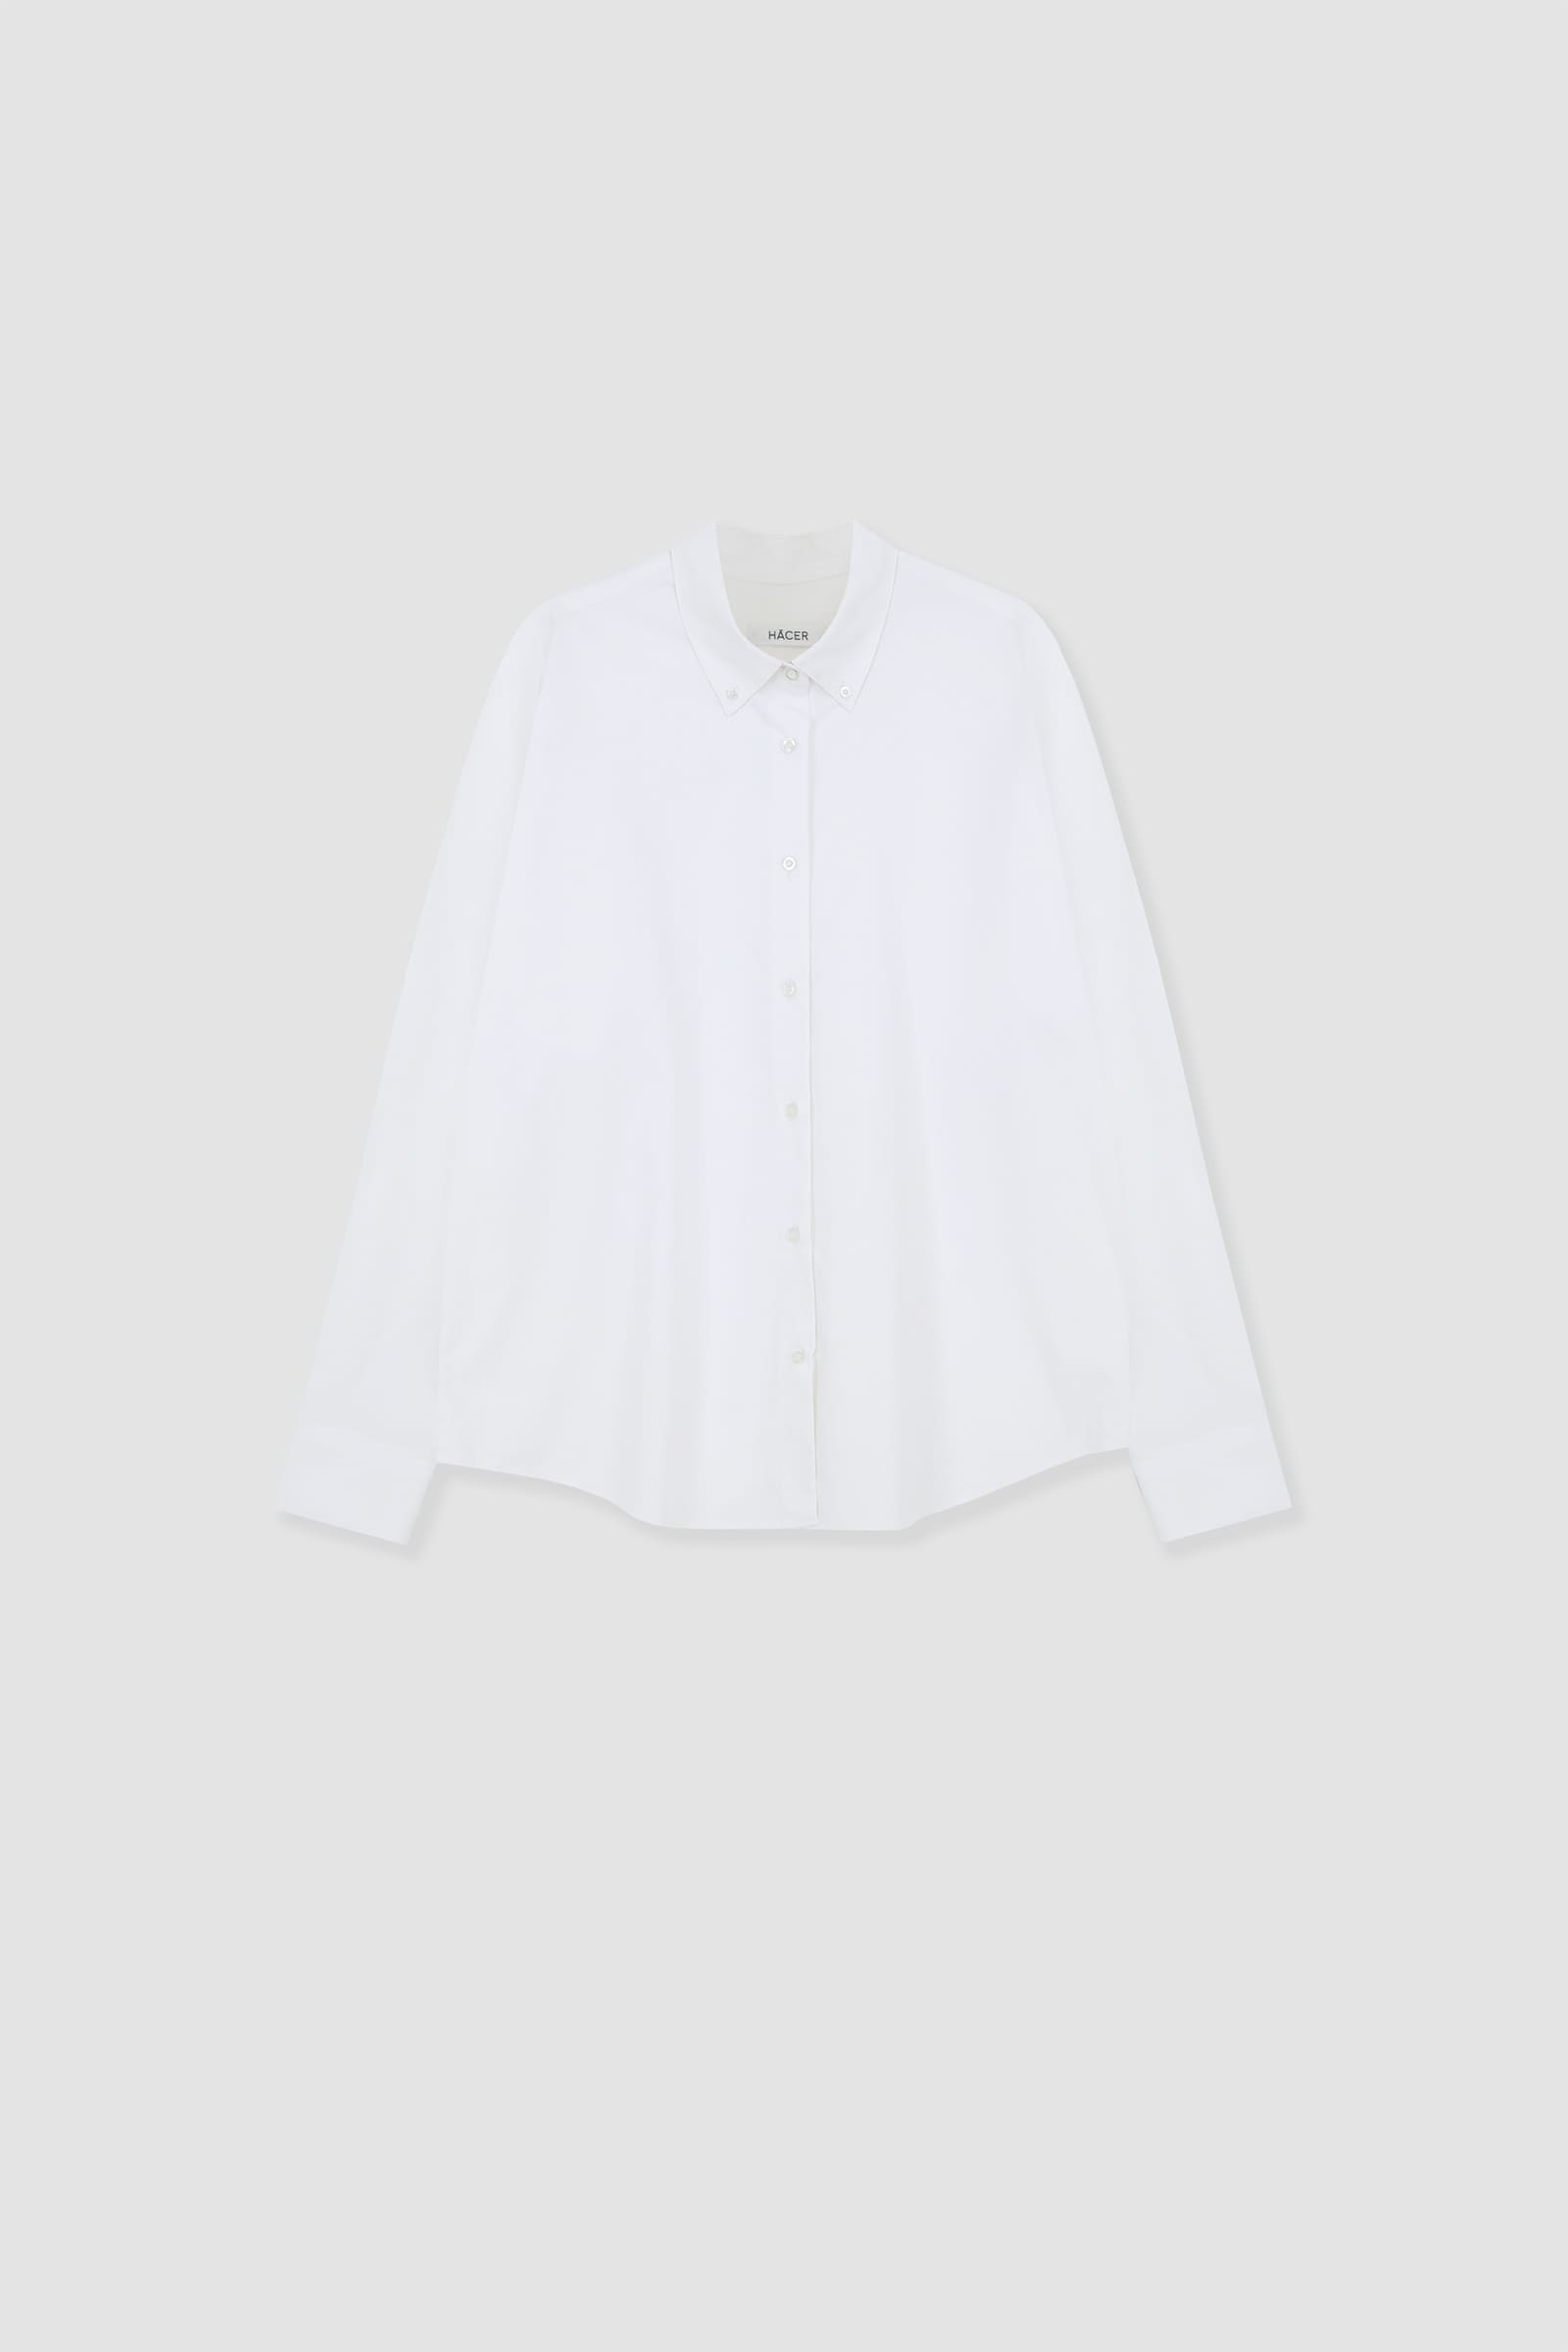 [2nd] Oxford Down Button Shirt